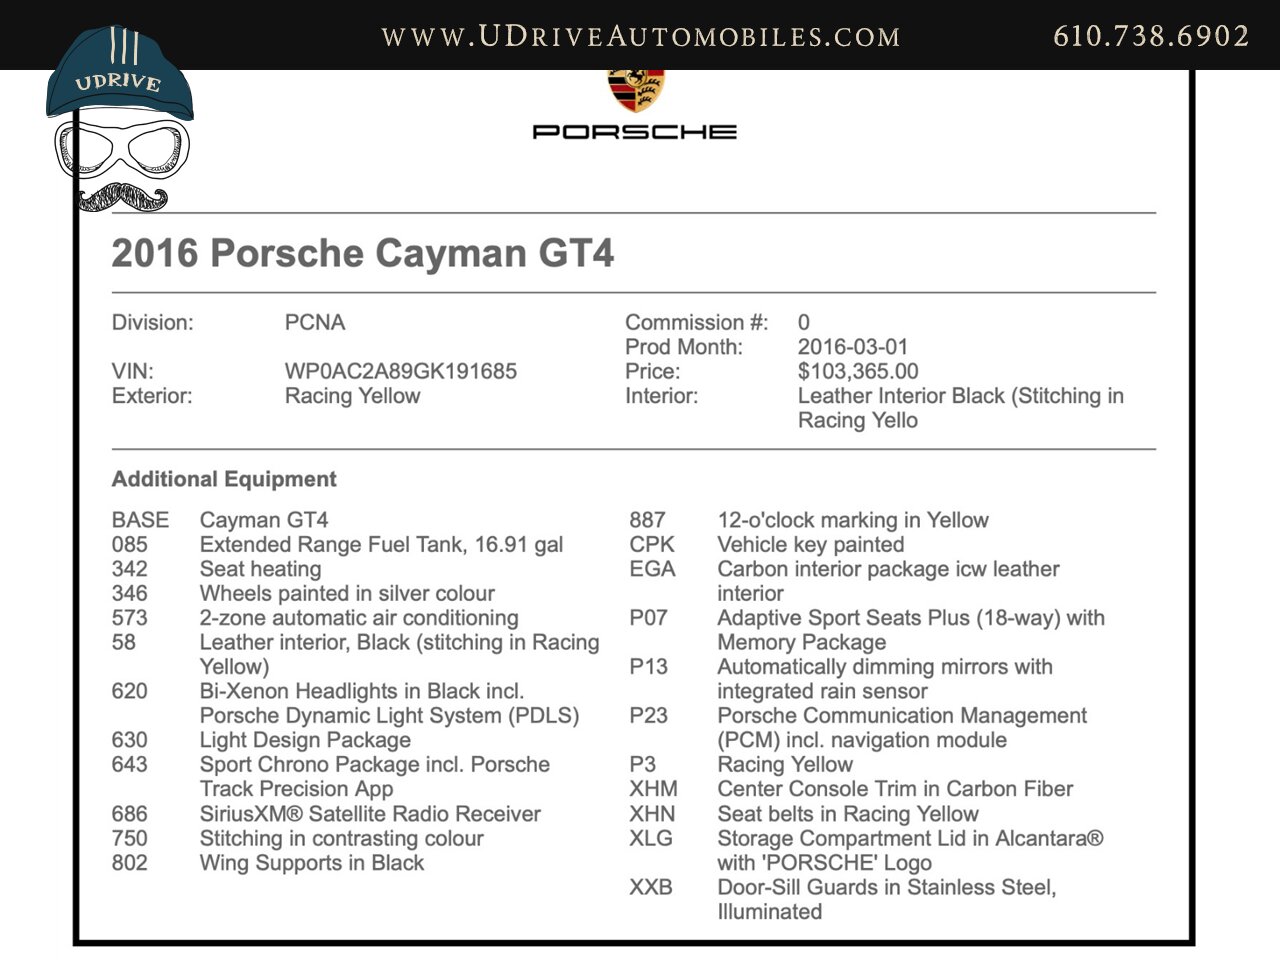 2016 Porsche Cayman GT4 1k Miles Full Lthr Adap Sprt Sts Yellow Stitch  Chrono Carbon Fiber Dundon D4 Street Power Pkg $42k in Extras - Photo 2 - West Chester, PA 19382